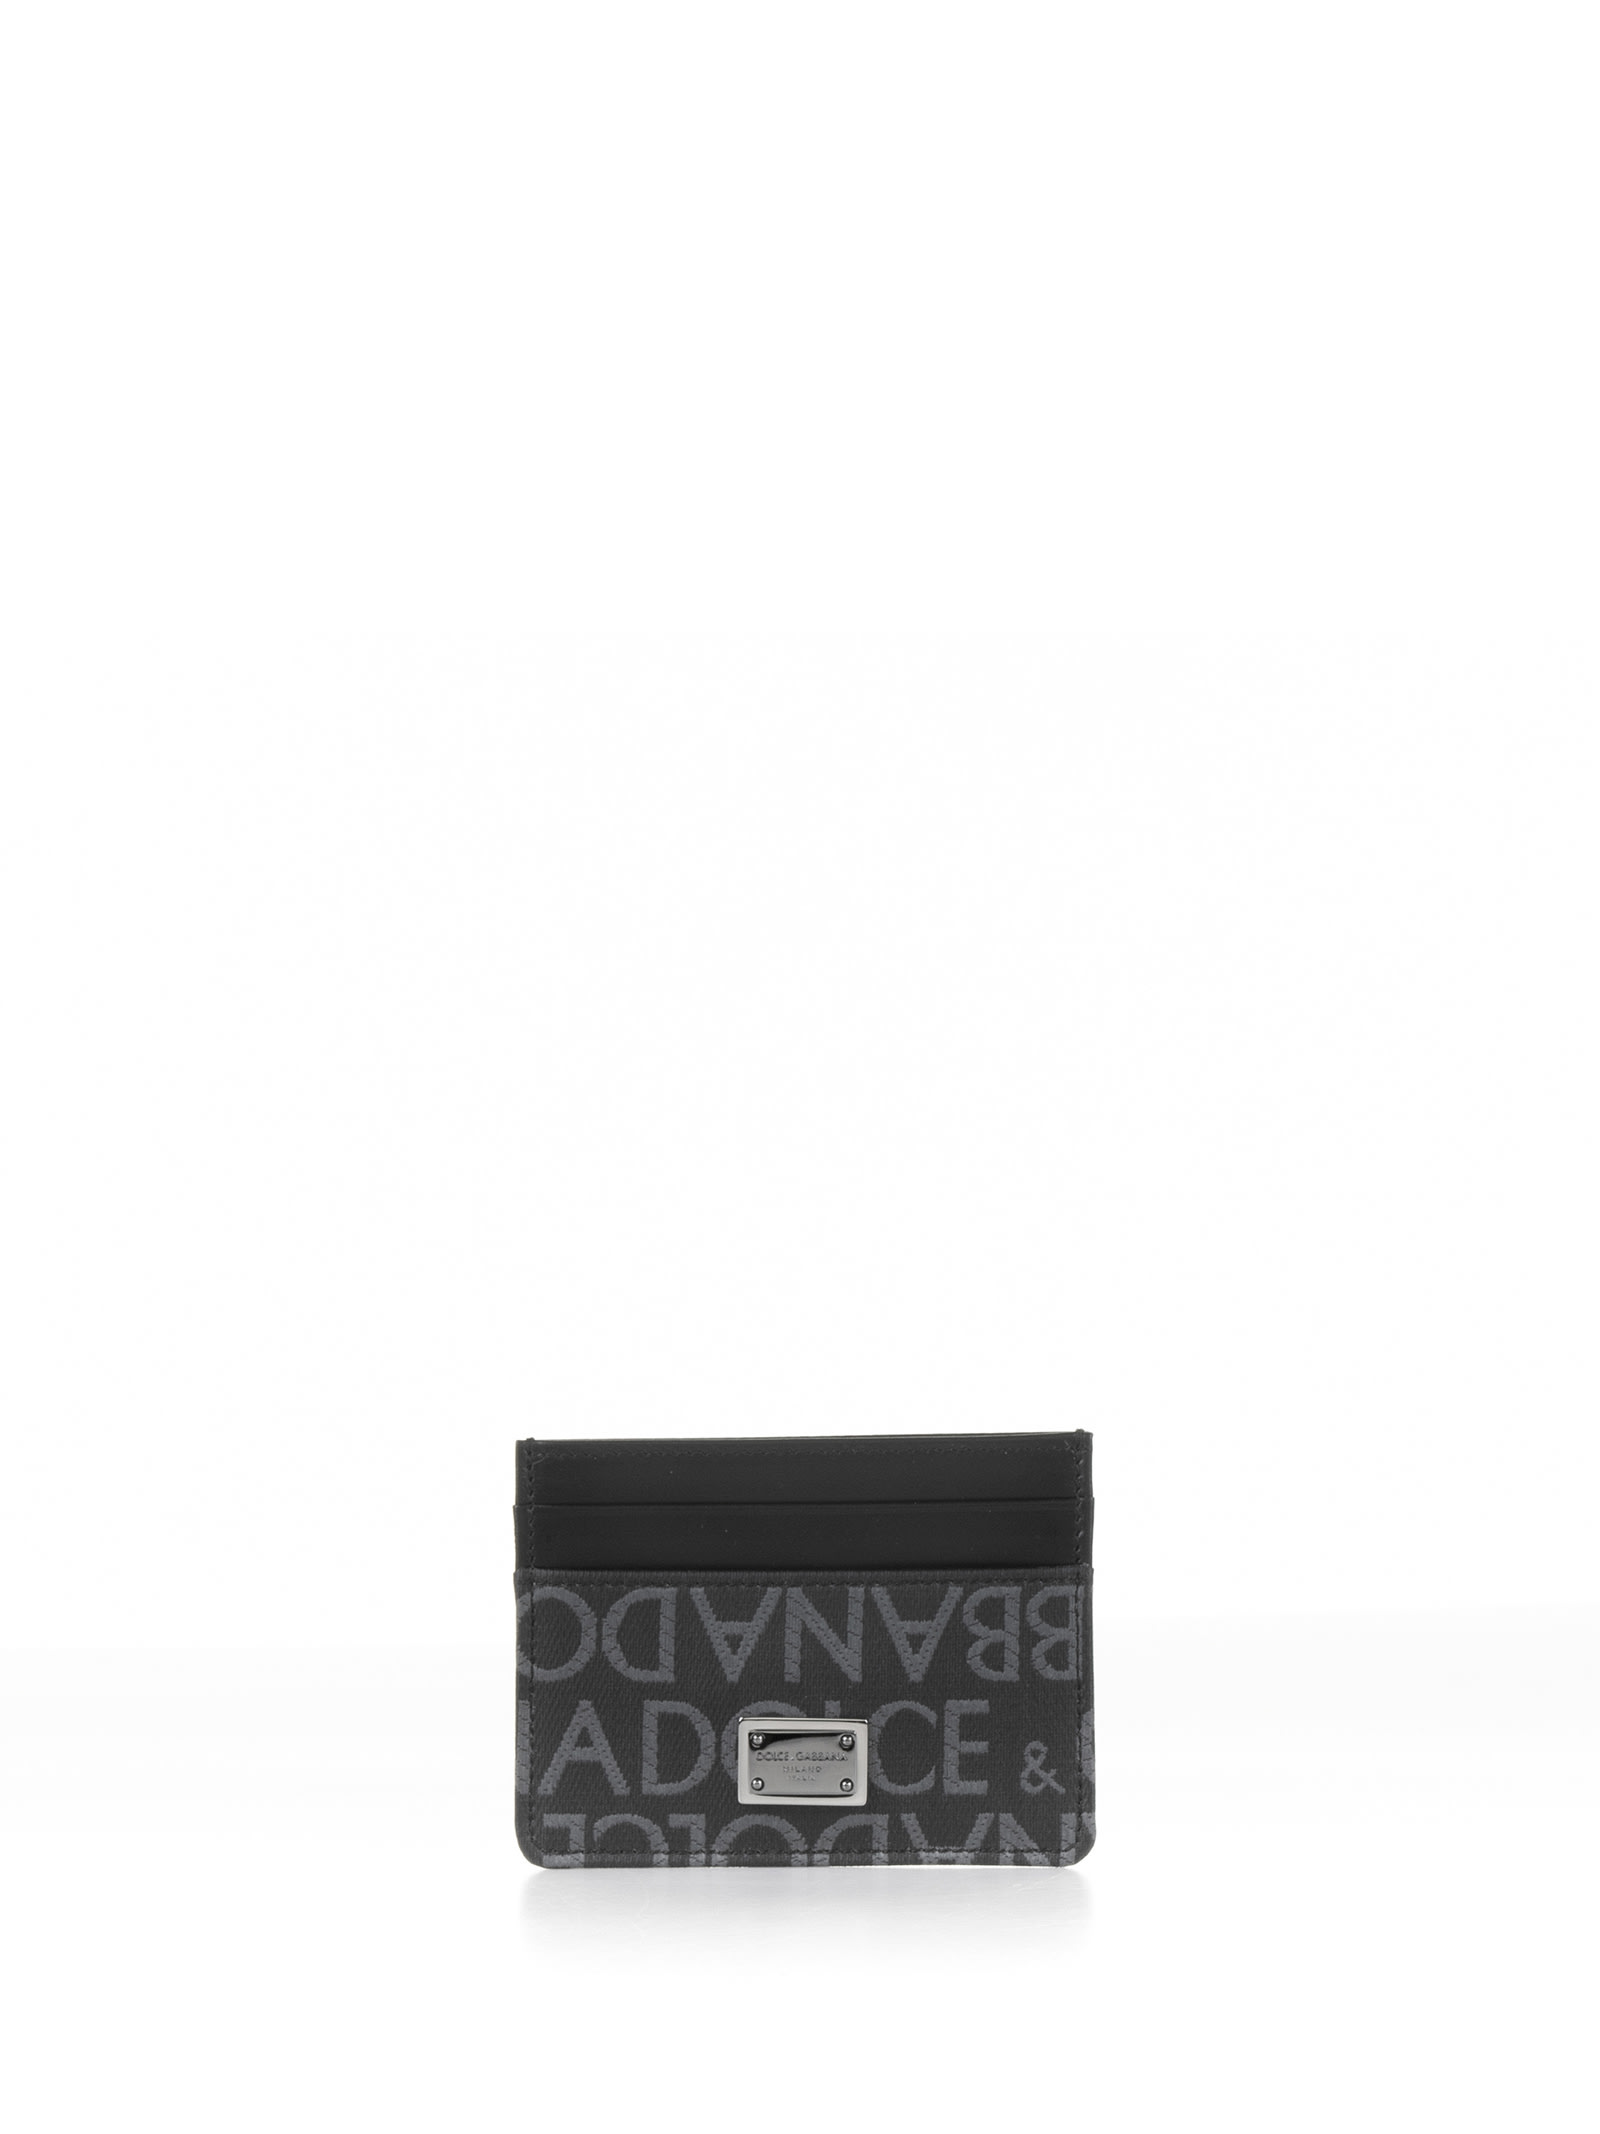 Dolce & Gabbana Black Gray Leather Card Holder With Logo In Nero Grigio